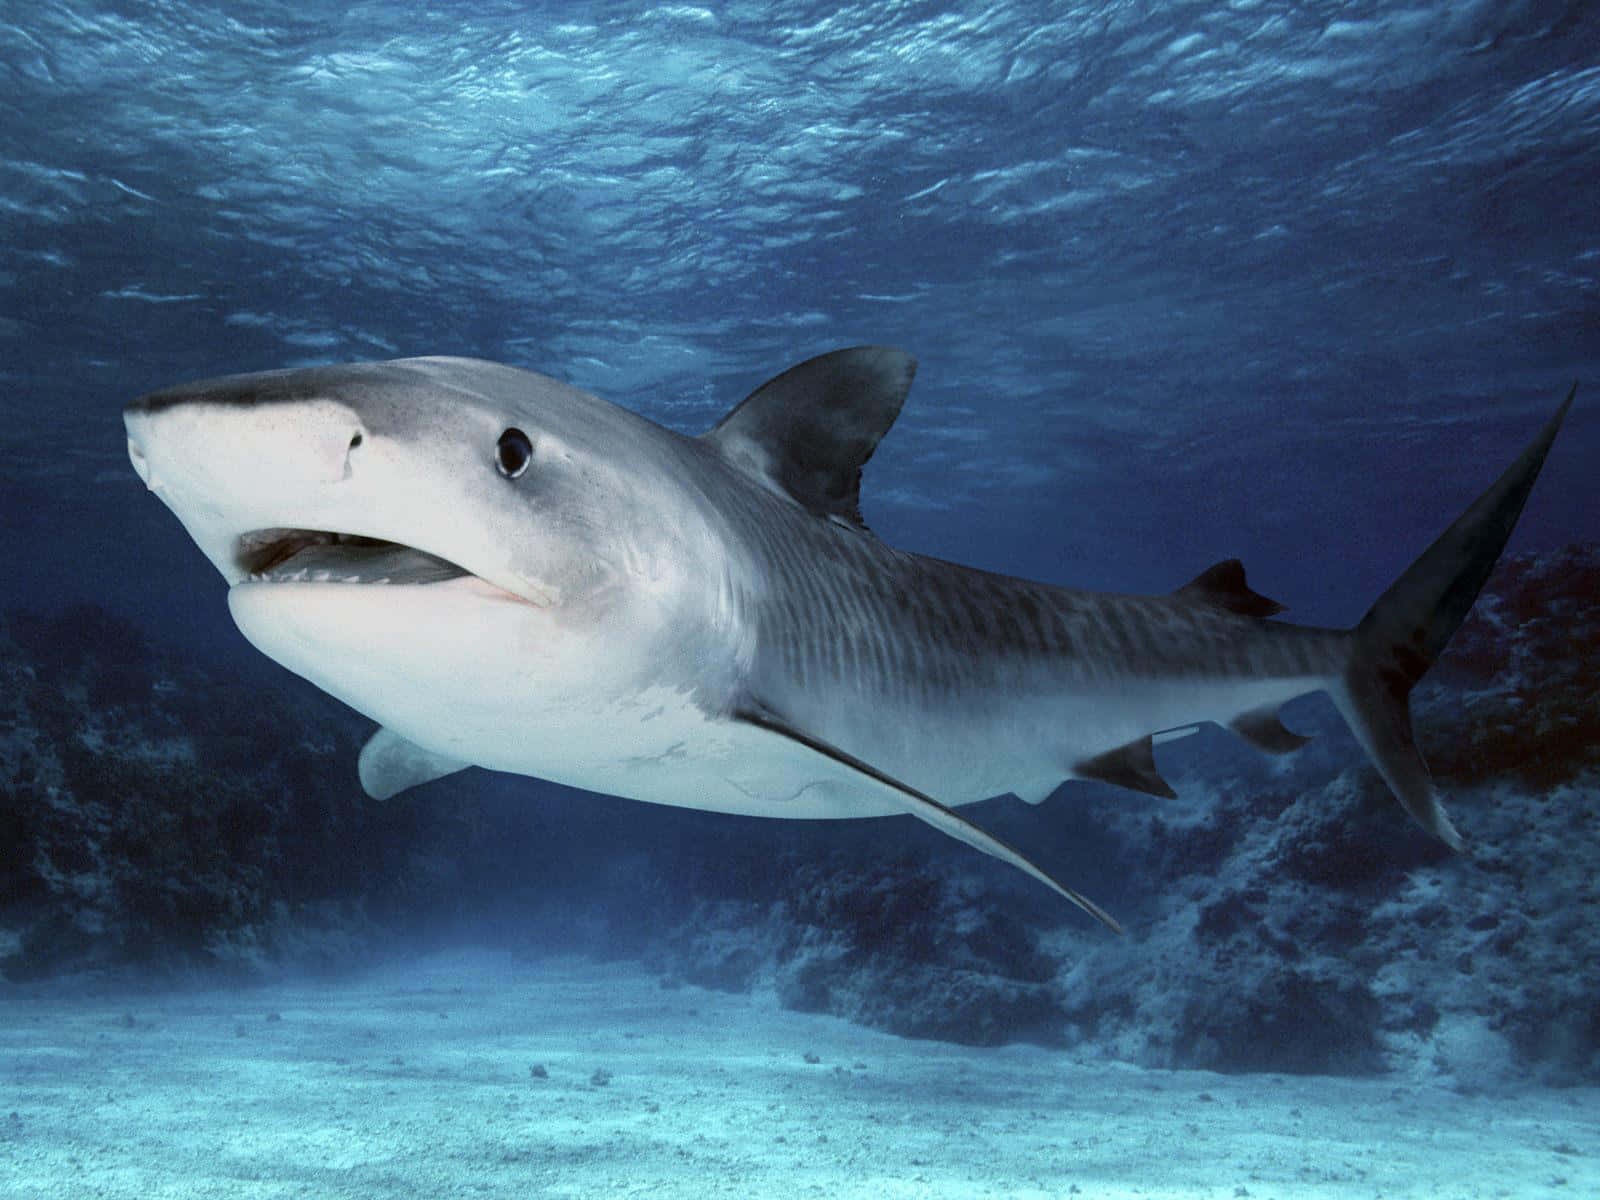 Unforgettable shark sighting off the Caribbean coast